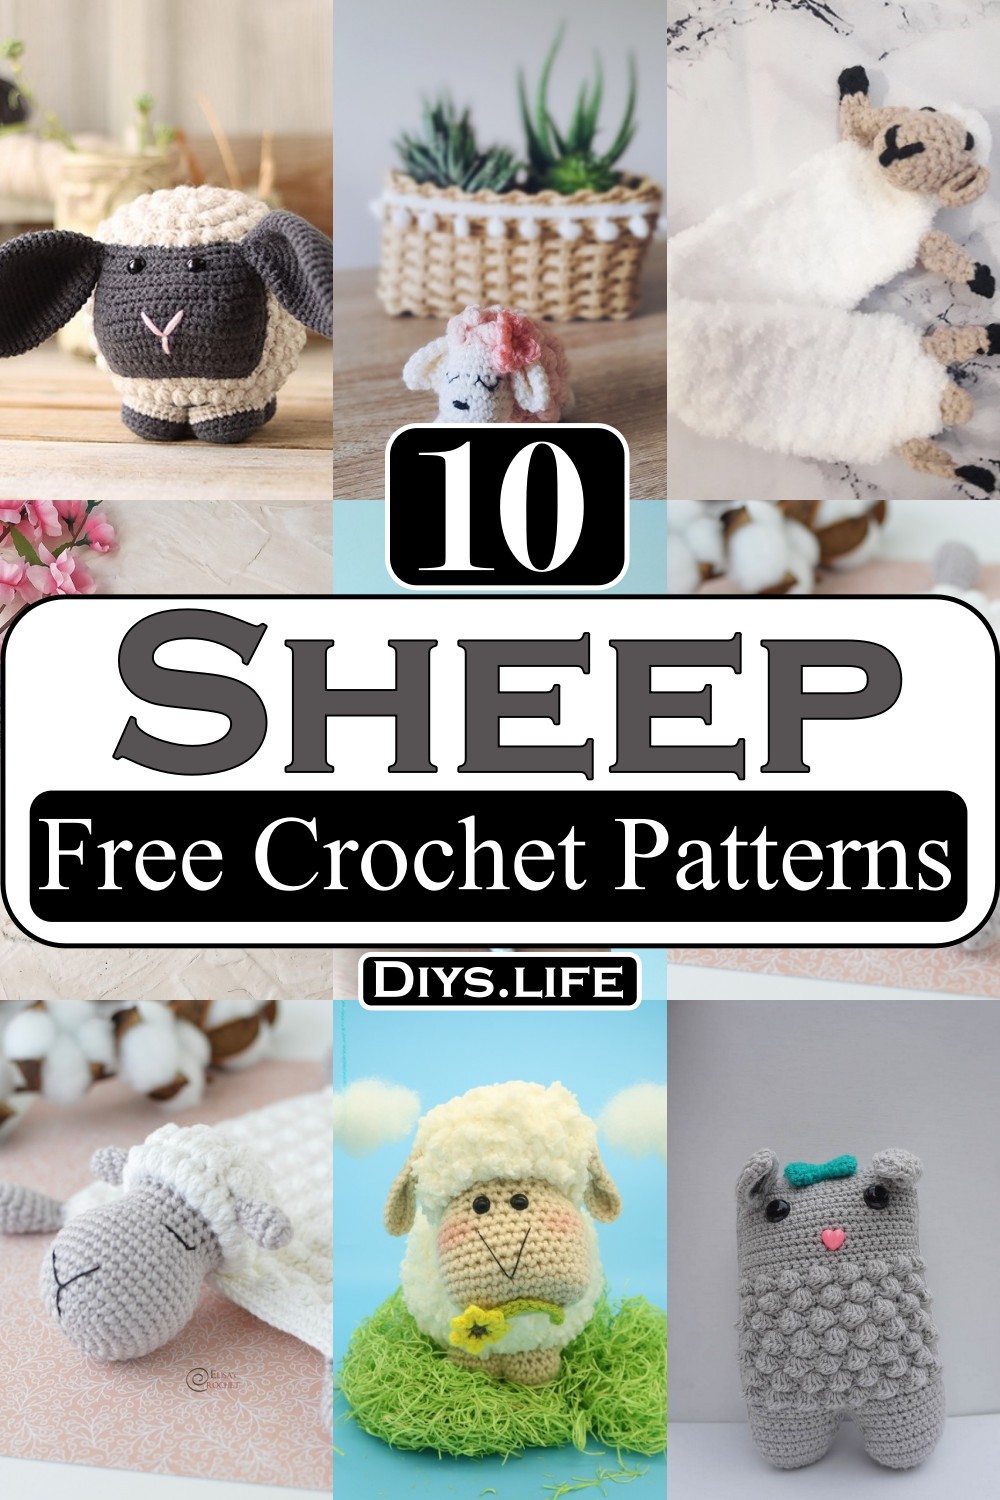 Crochet Sheep Patterns